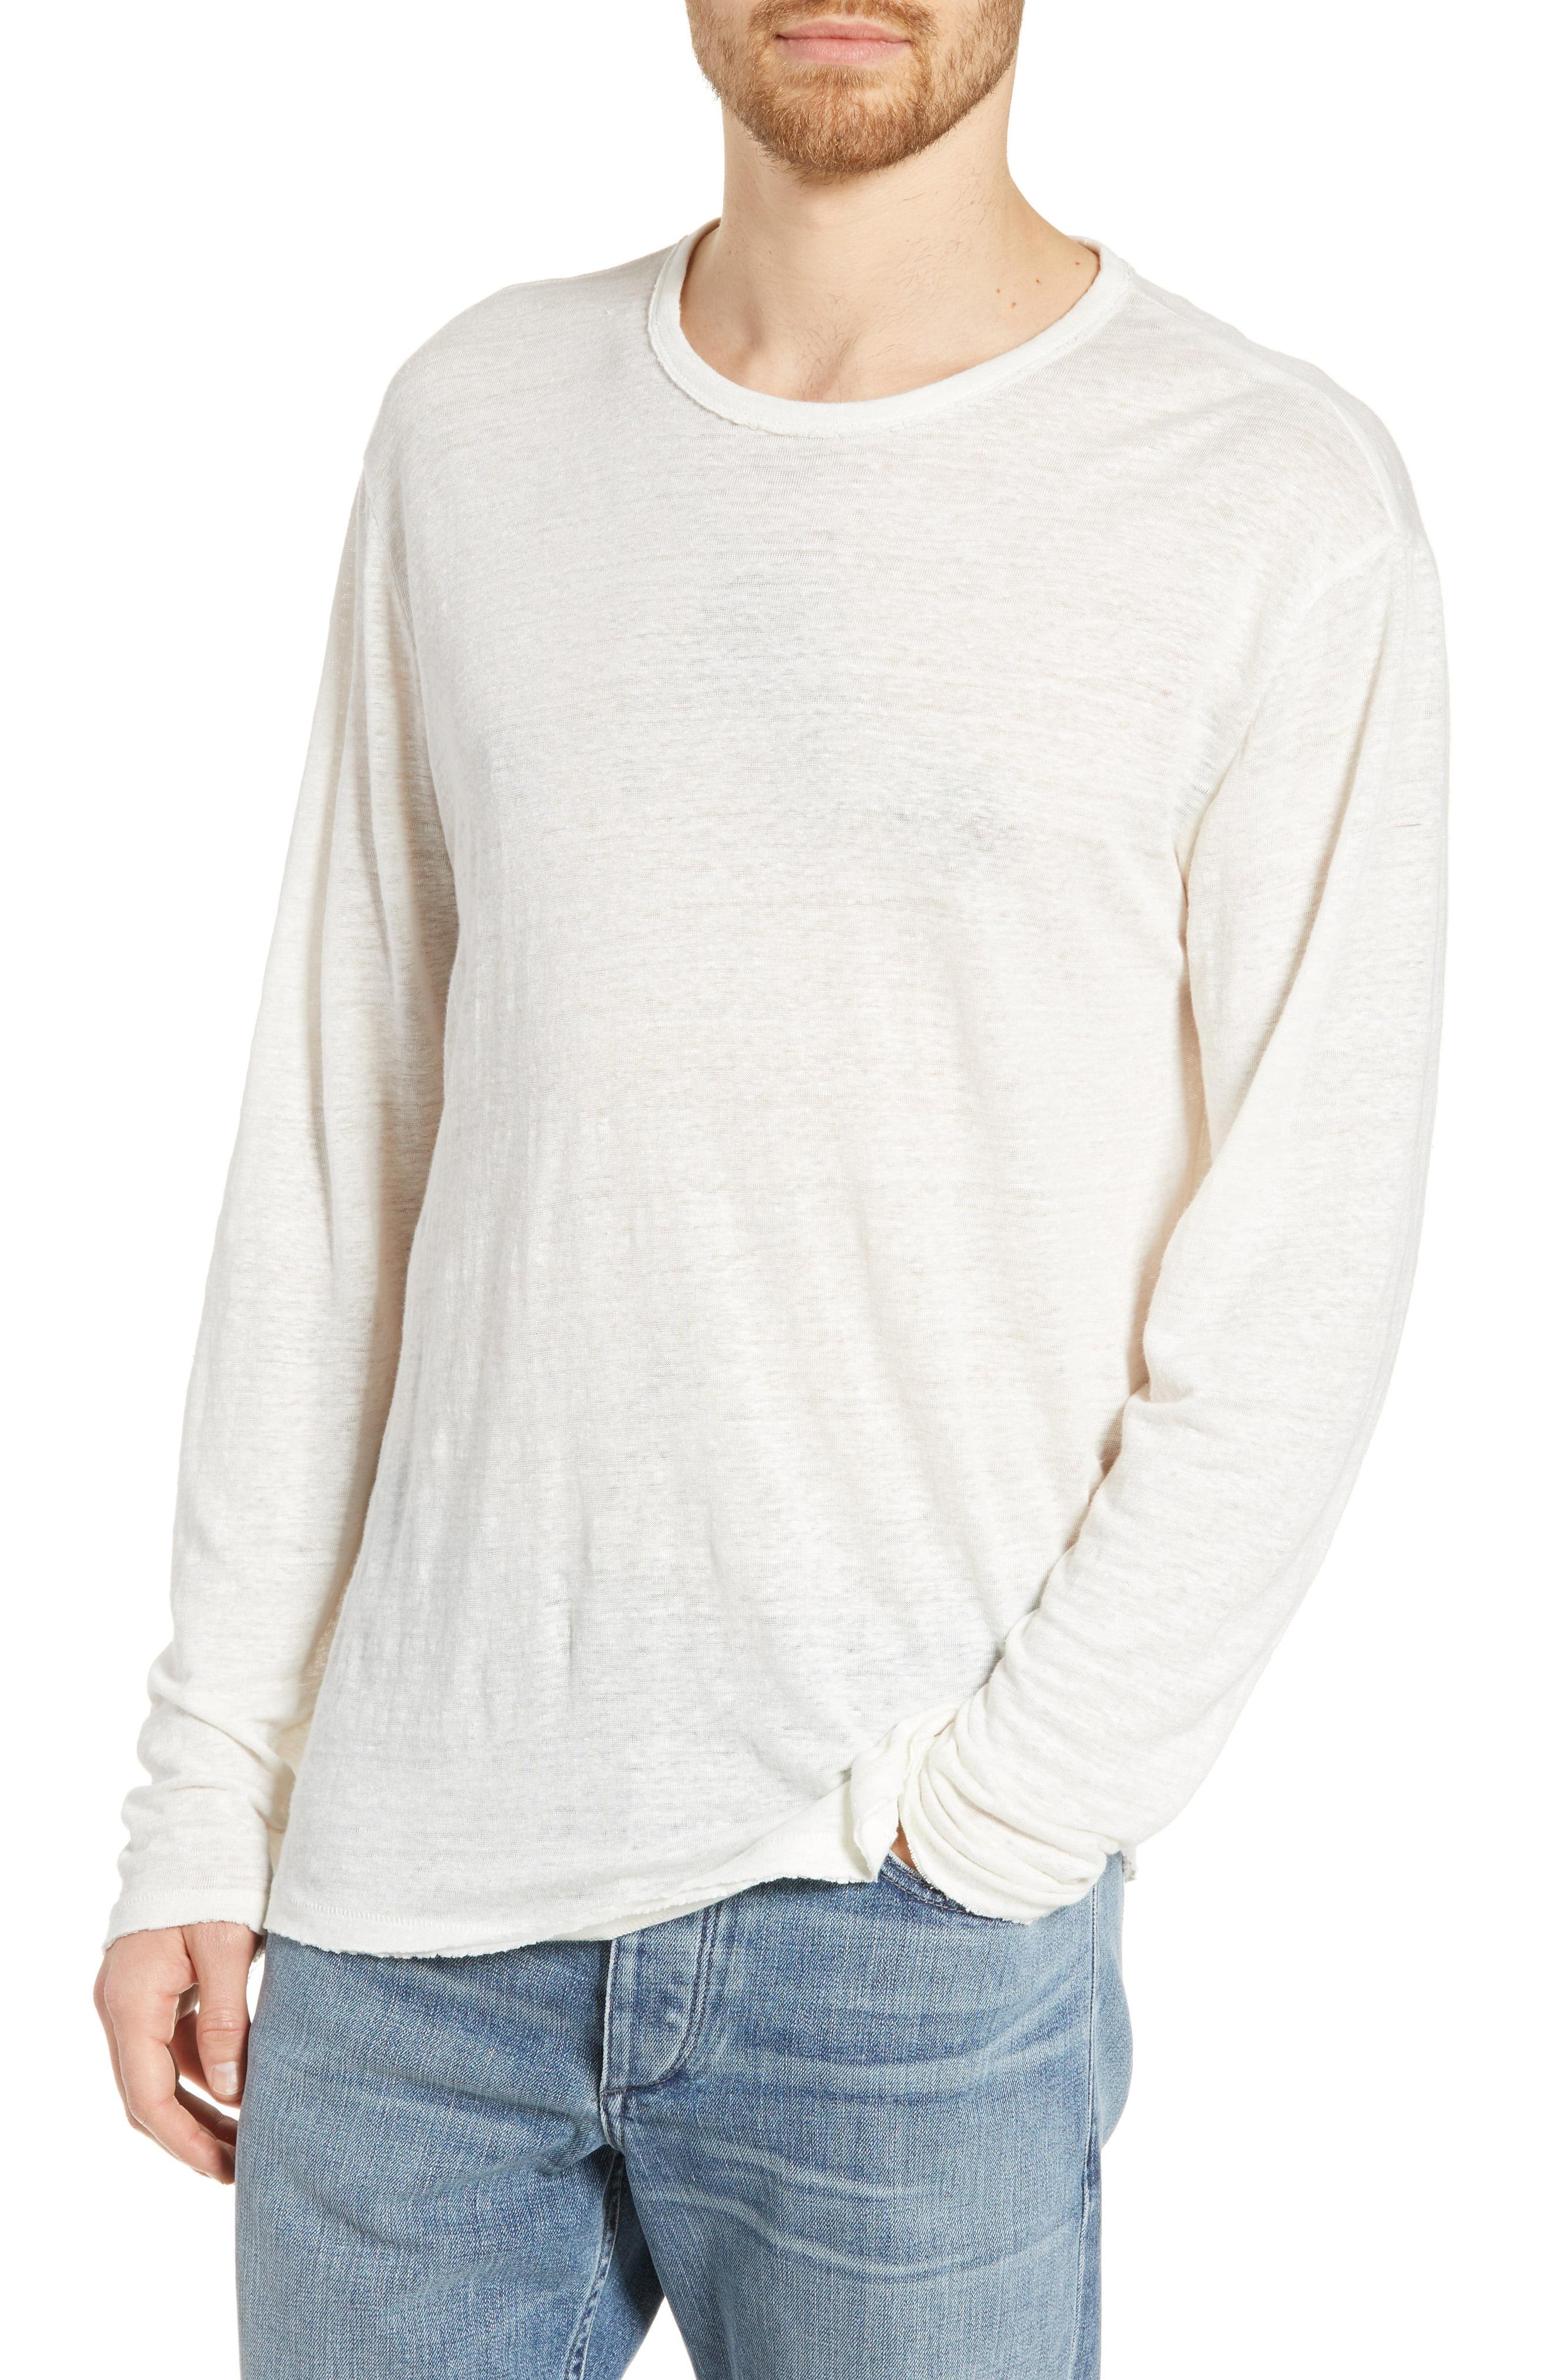 Lyst - Rag & Bone Owen Slim Fit Long Sleeve Linen T-shirt in Gray for Men